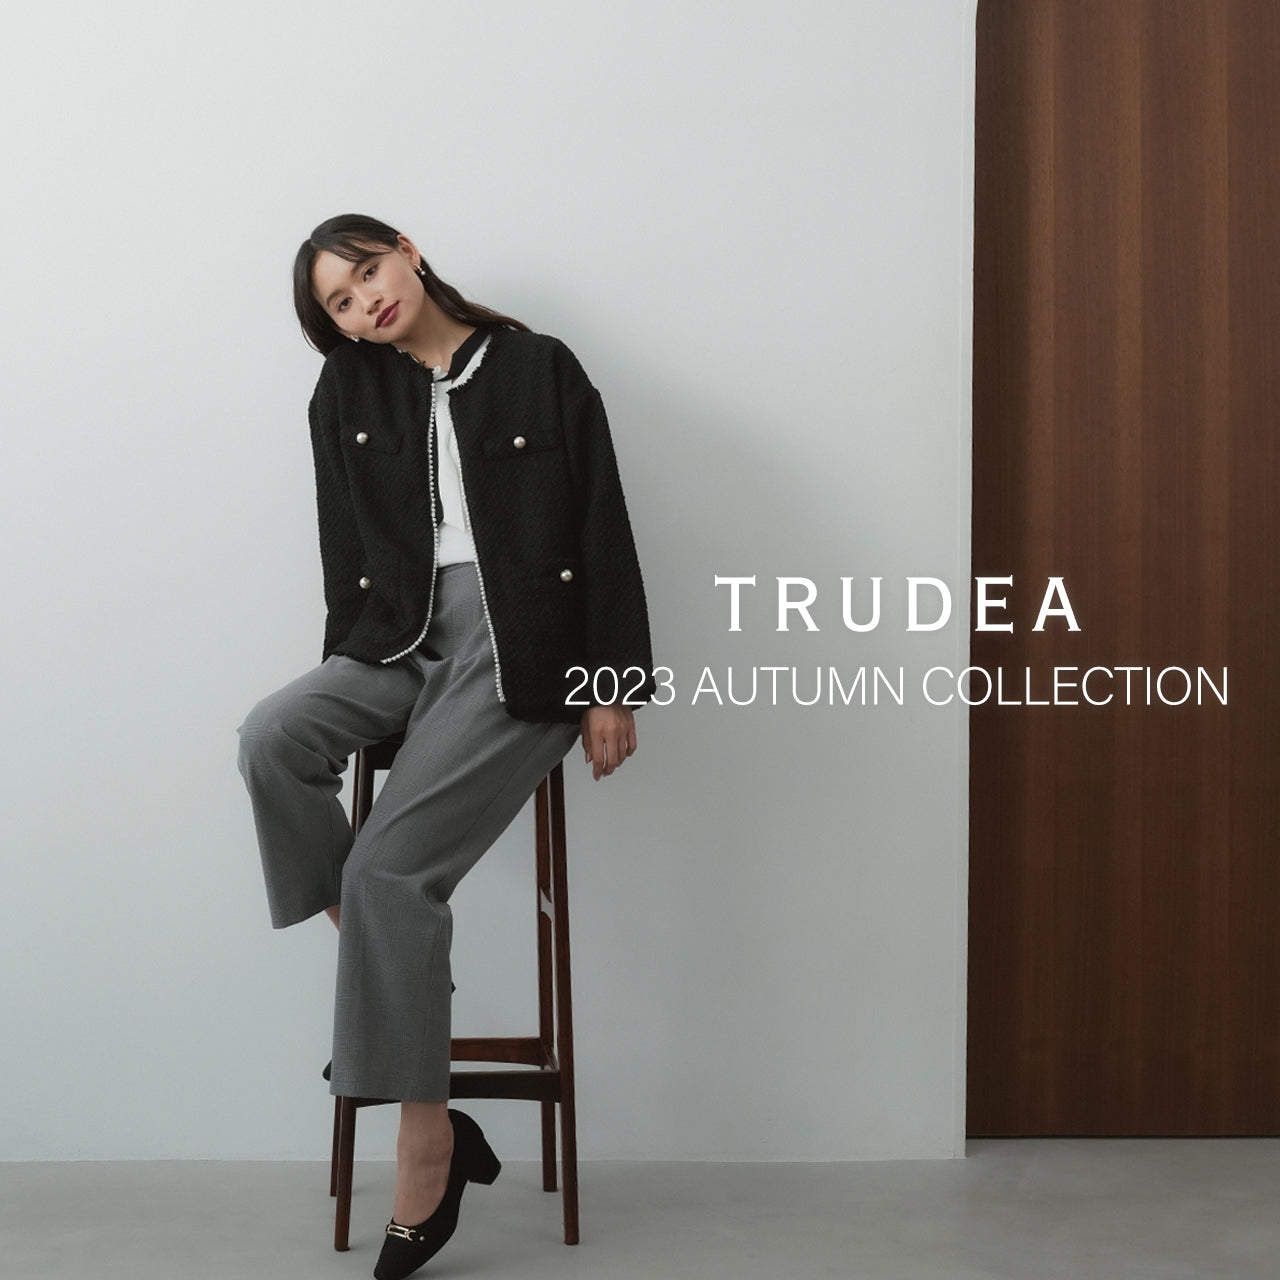 TRUDEA 2023 AUTUMN COLLECTION